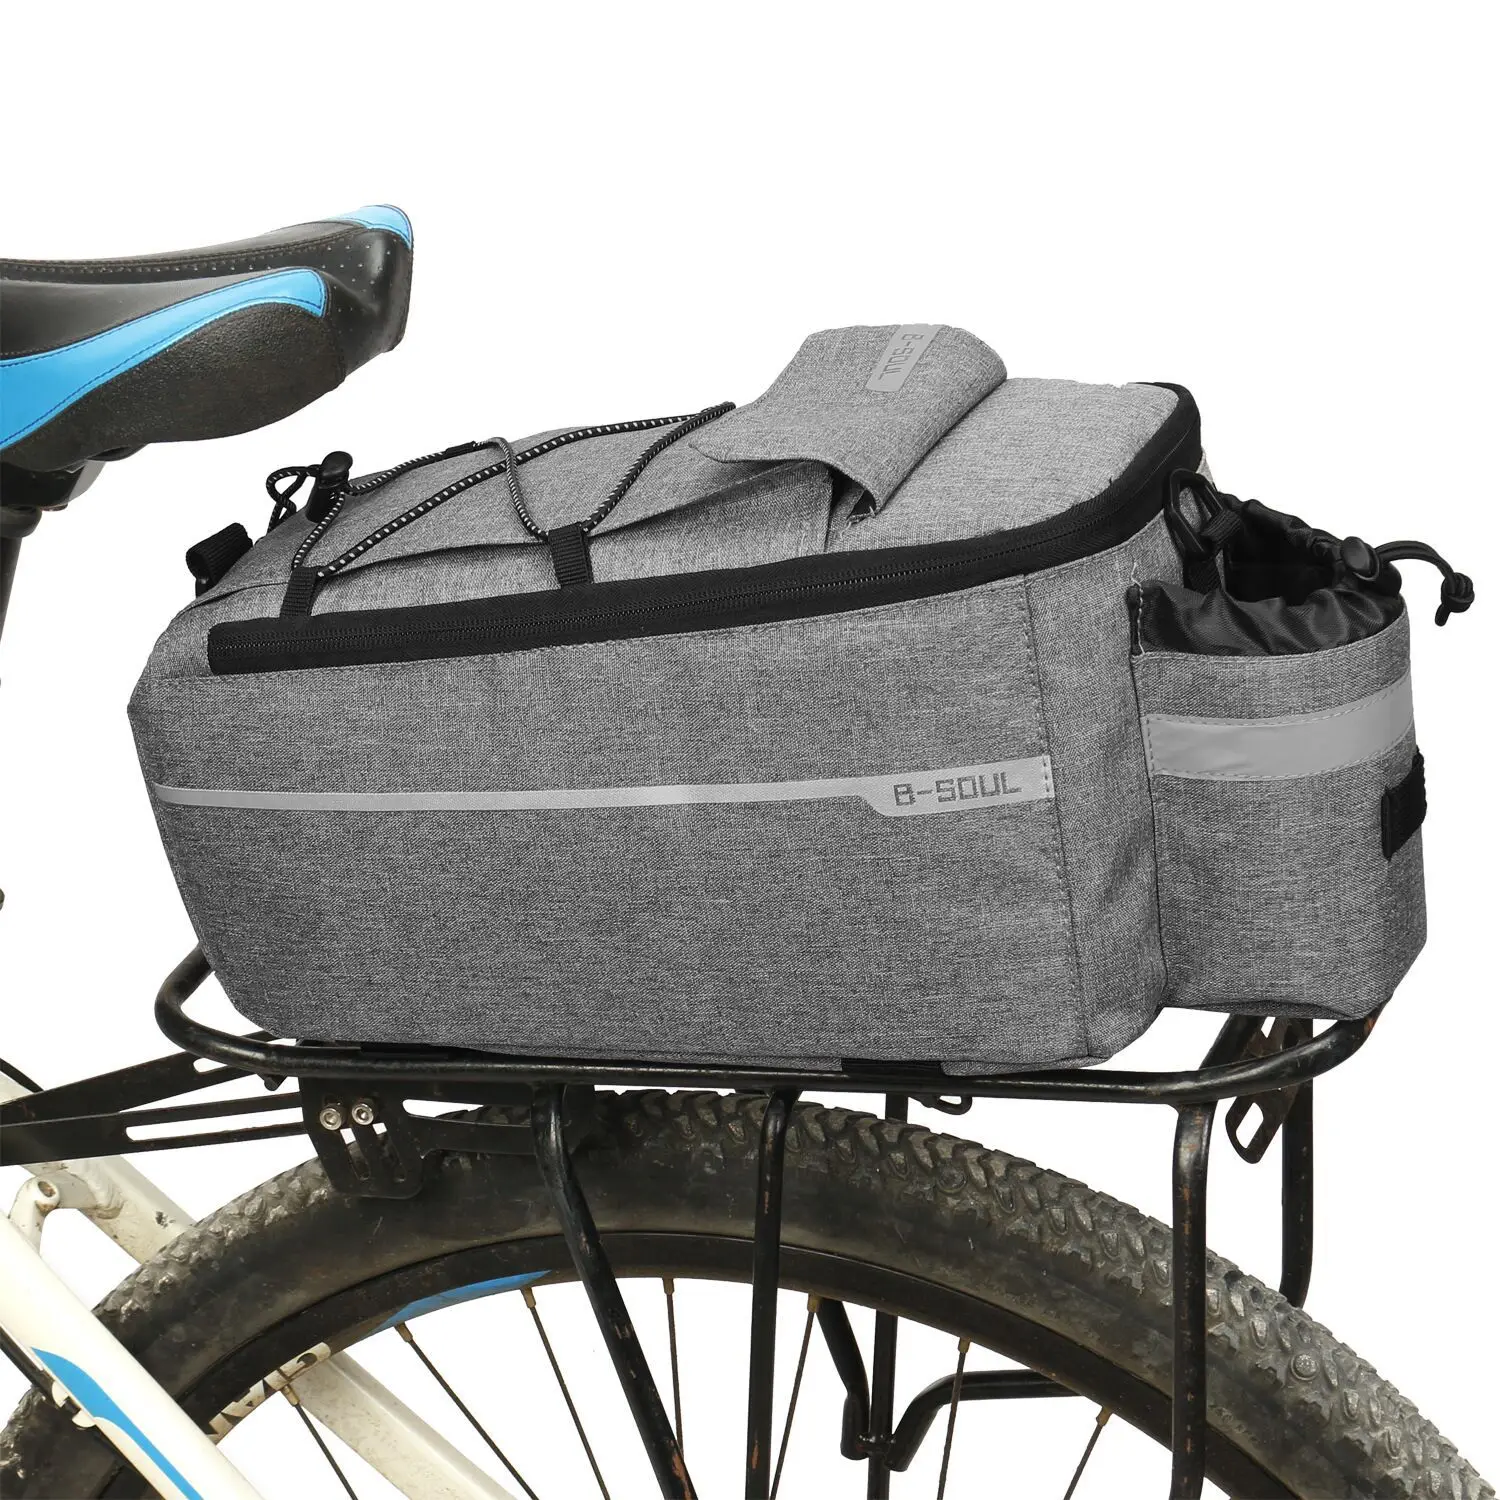 

Cycling Bicycle Trunk Bolsa Para Bicicleta Bike Carrier Saddle Bag with Bottle Holder, Black grey